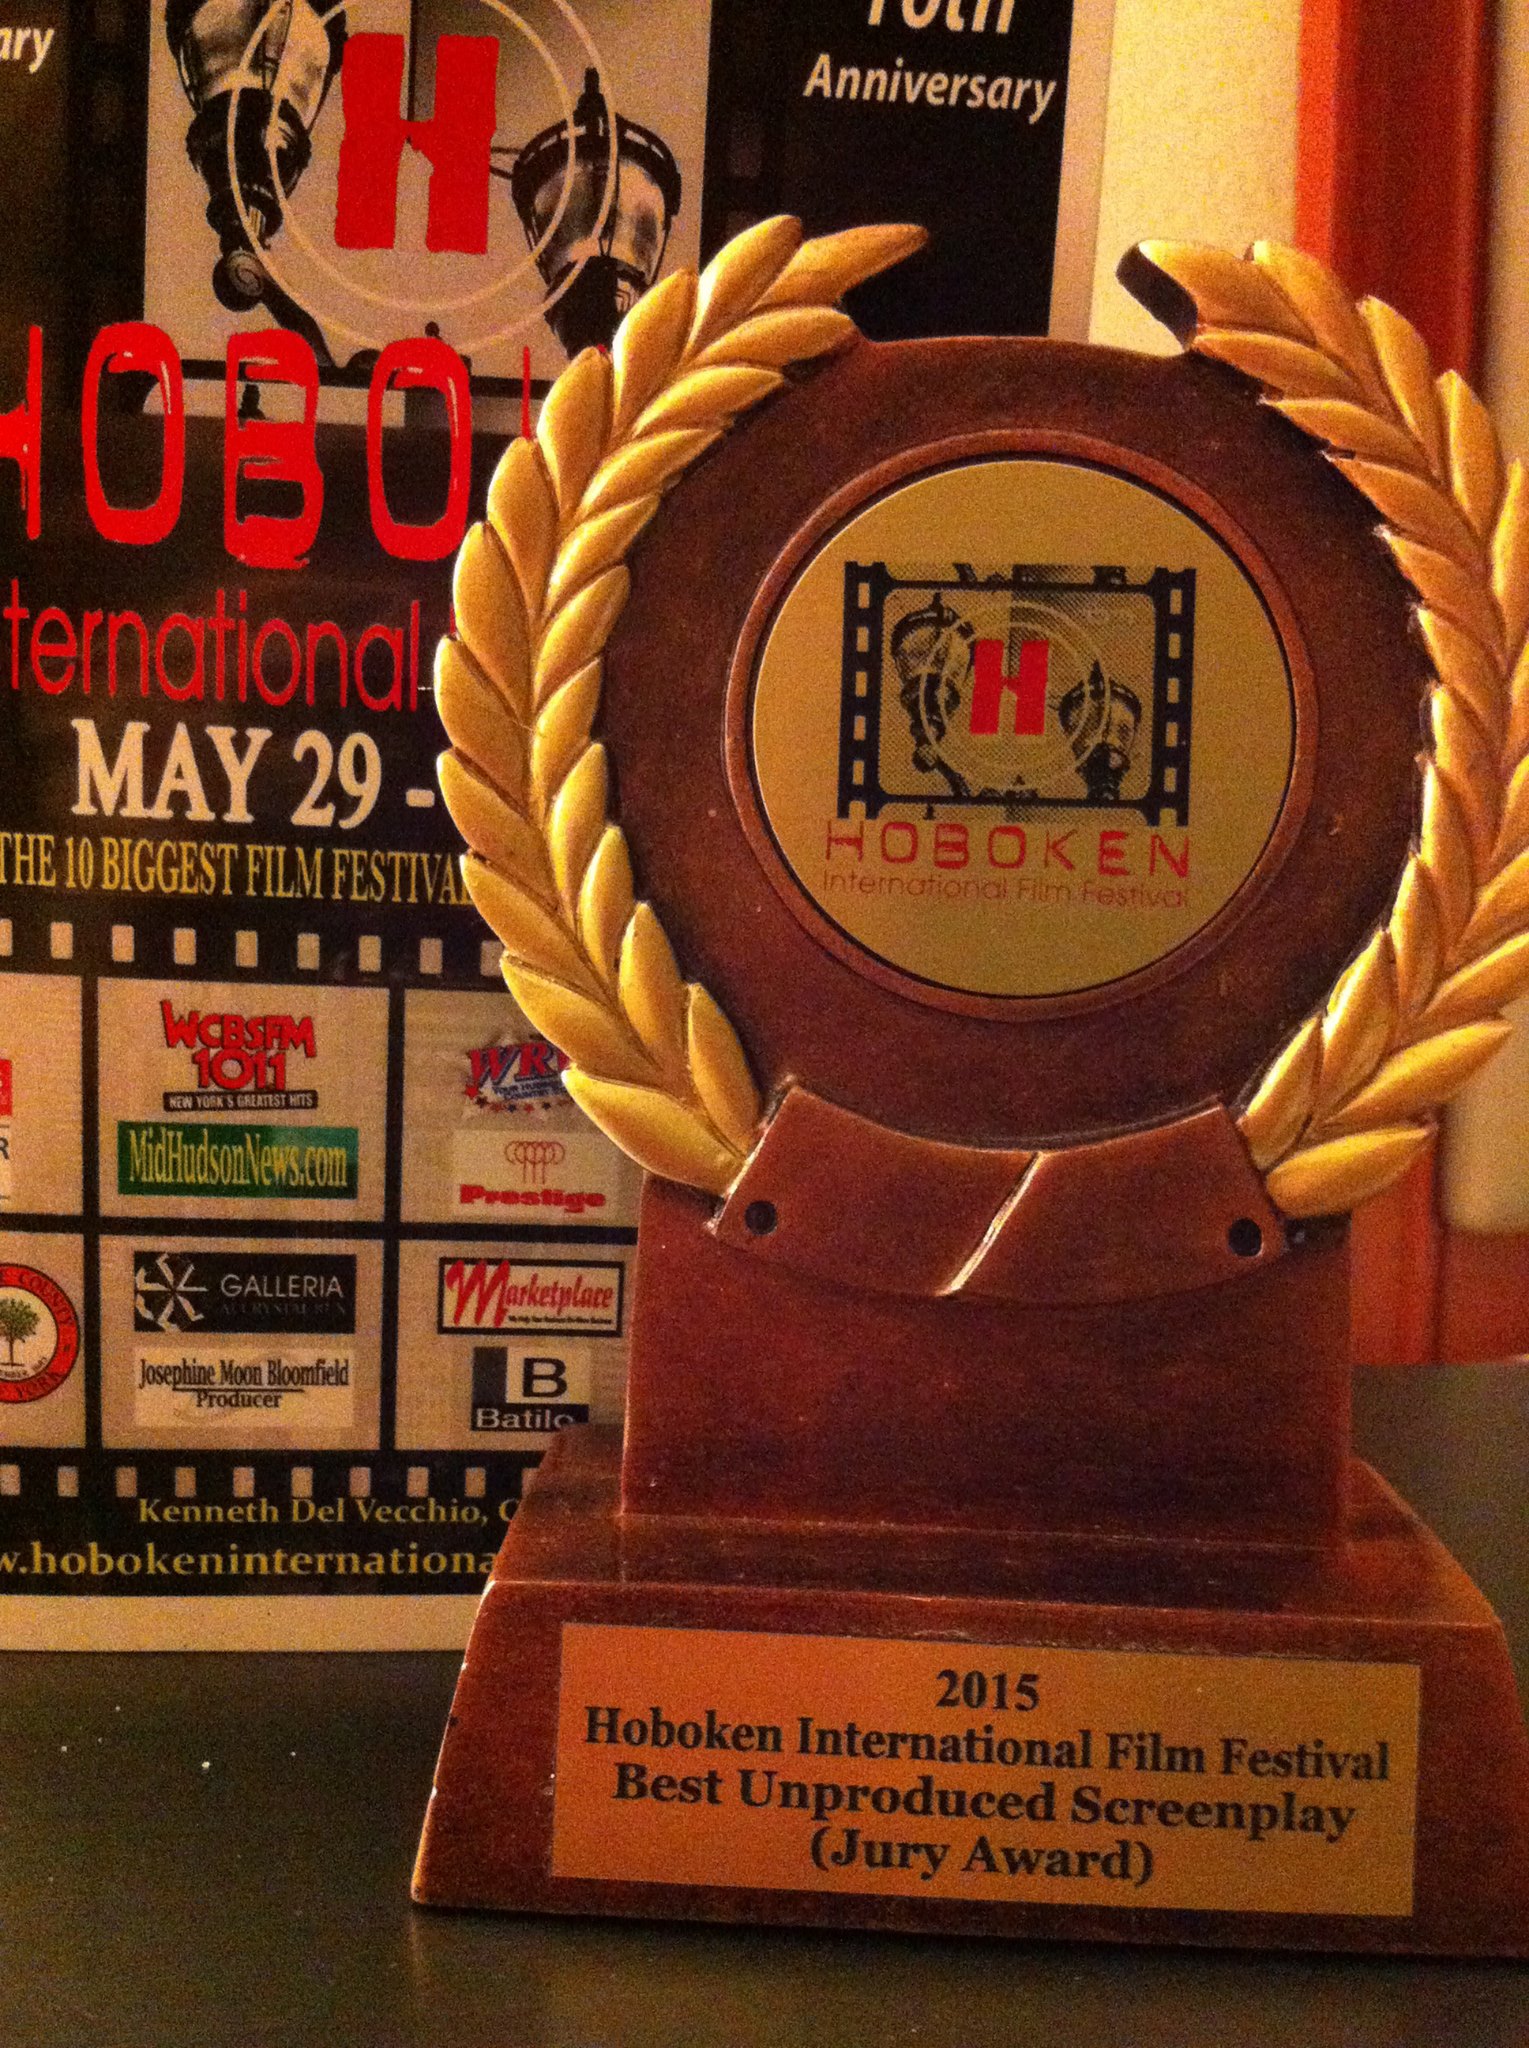 Seriah's Legacy has won BEST UNPRODUCED SCREENPLAY at the 2015 Hoboken International Film Festival.